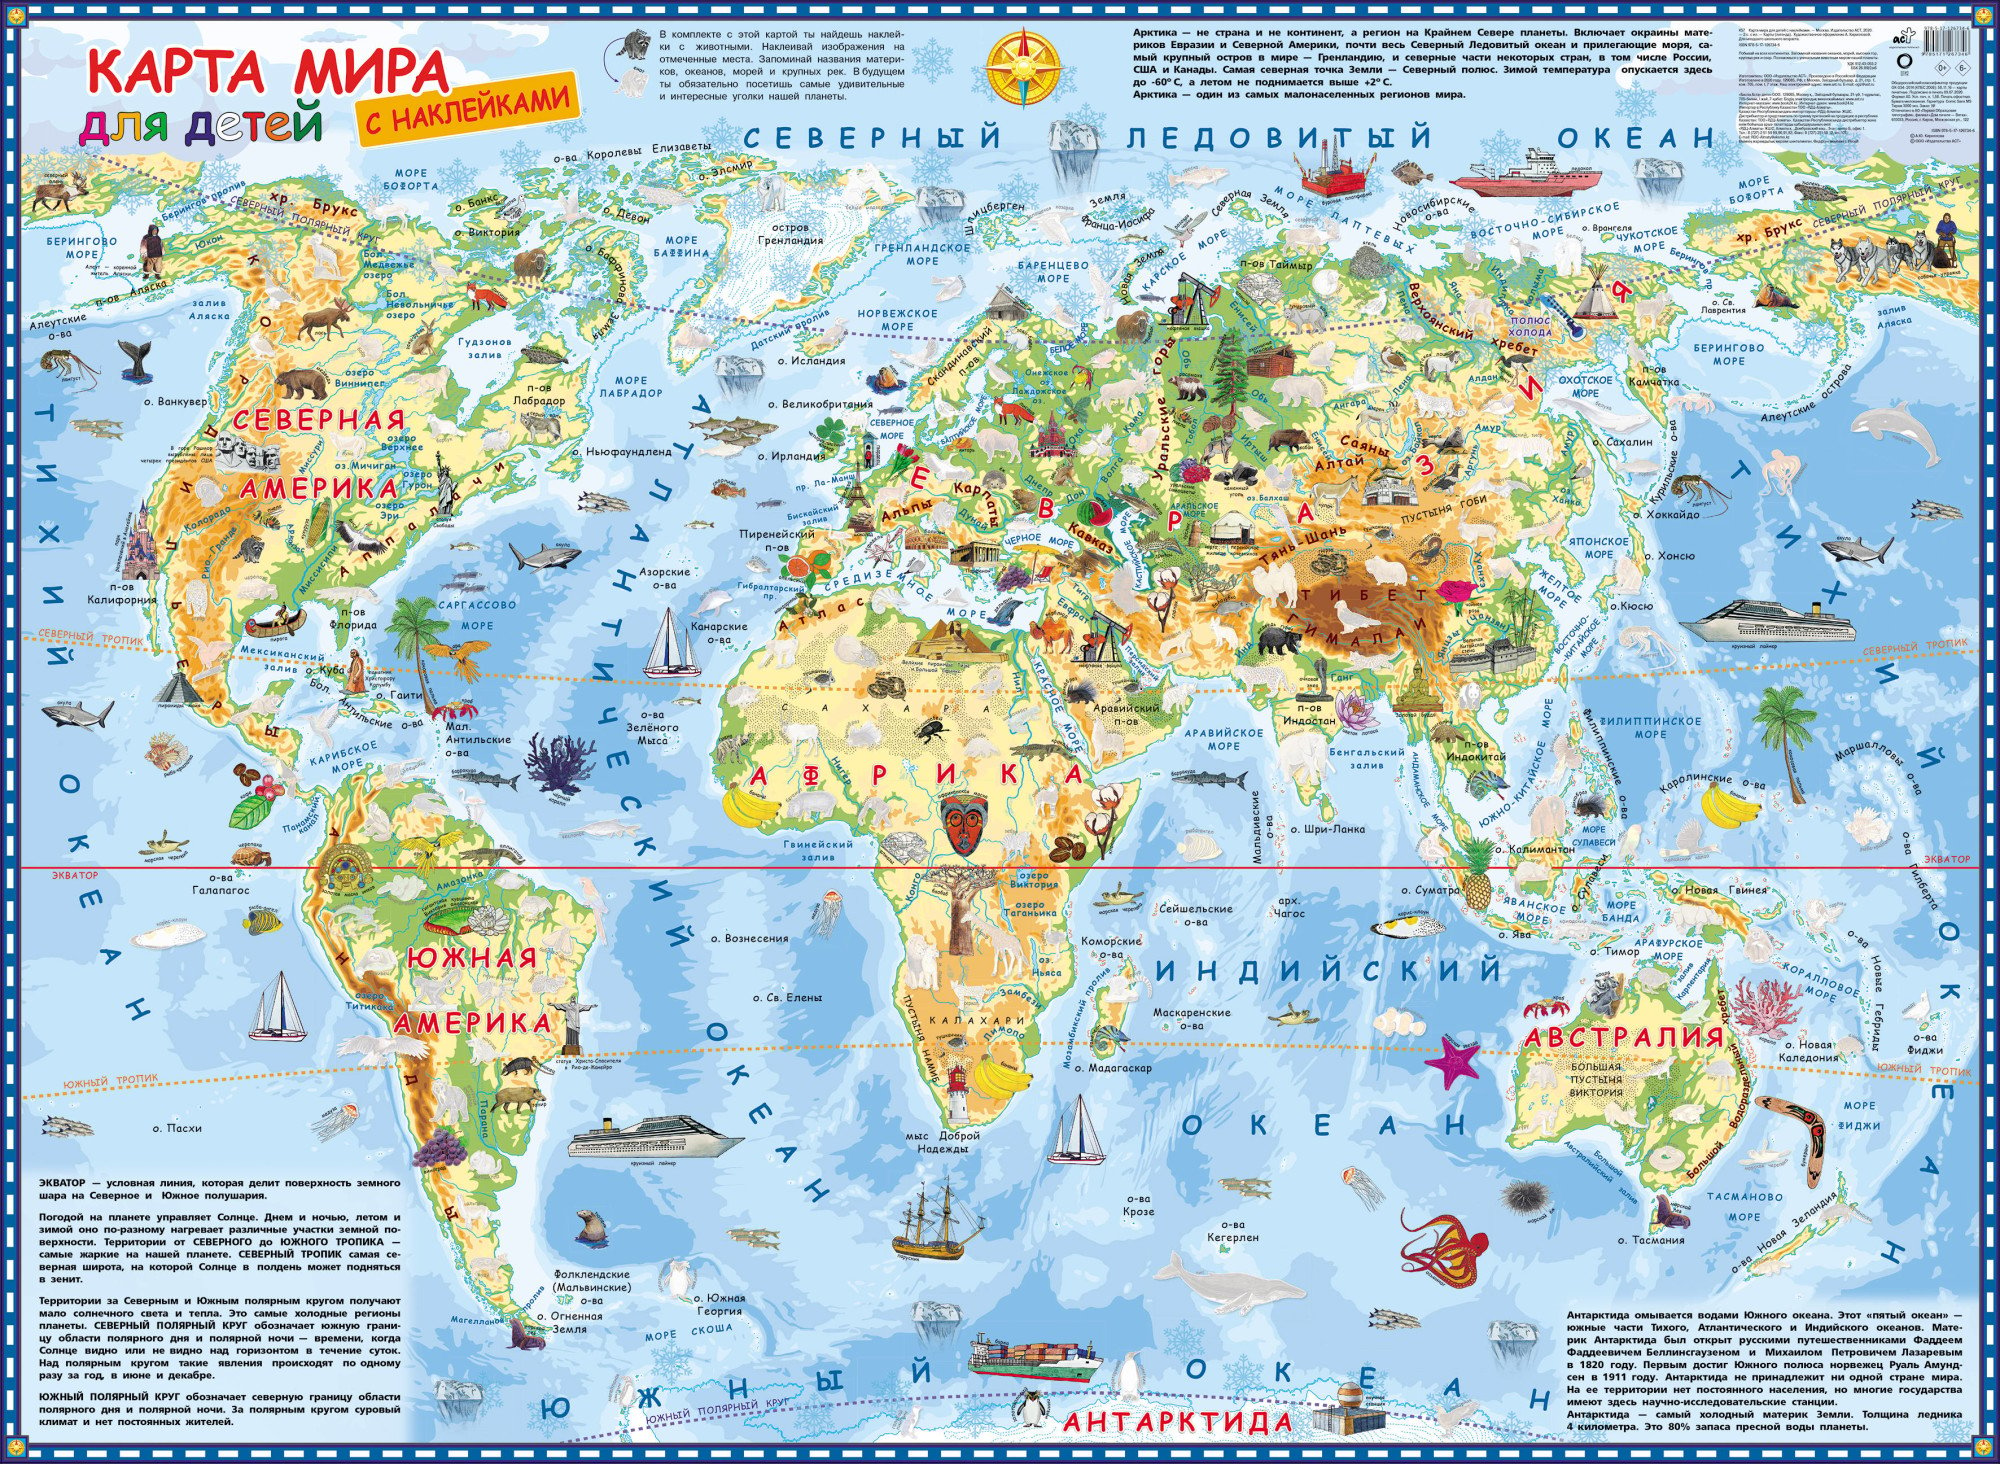 Материки на карте мира фото